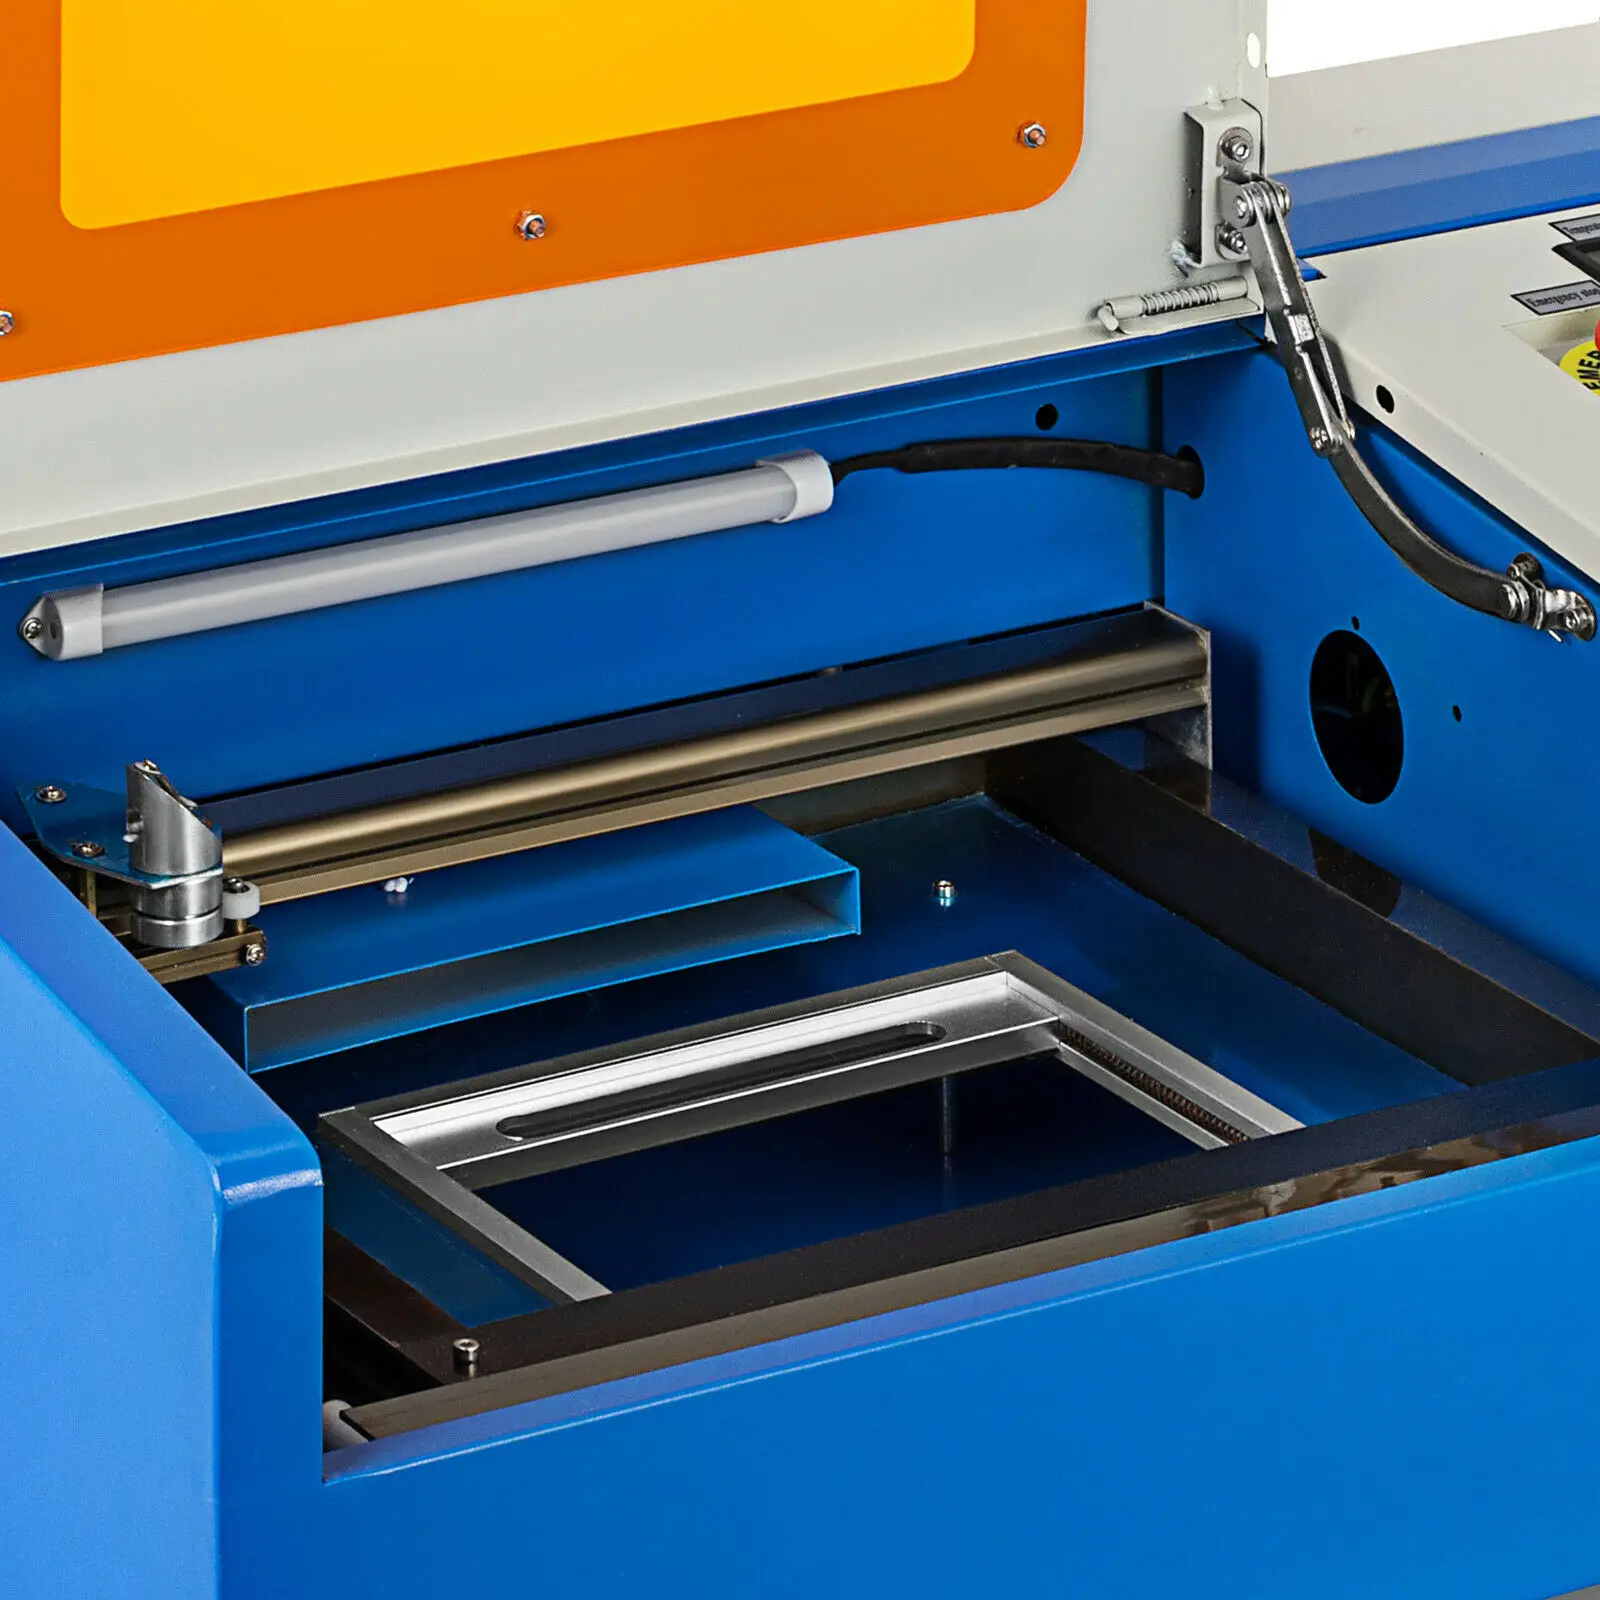 China distributor / dealer mini crafts Laser Engraver making rubber stamp laser engraving machine